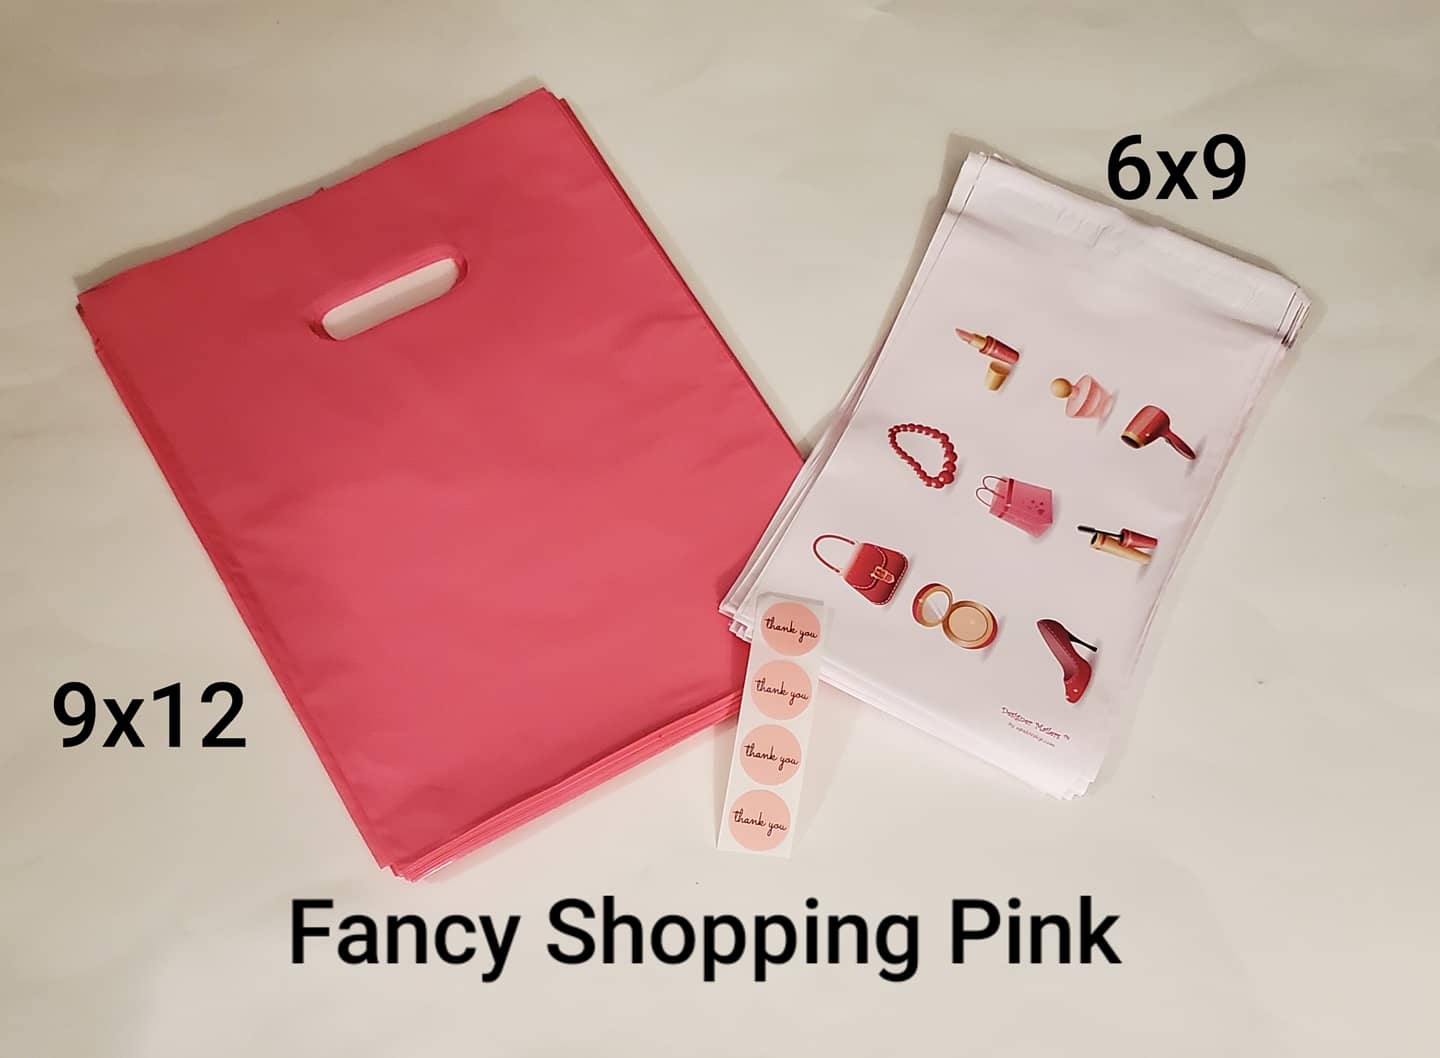 Fancy Shopping Pink